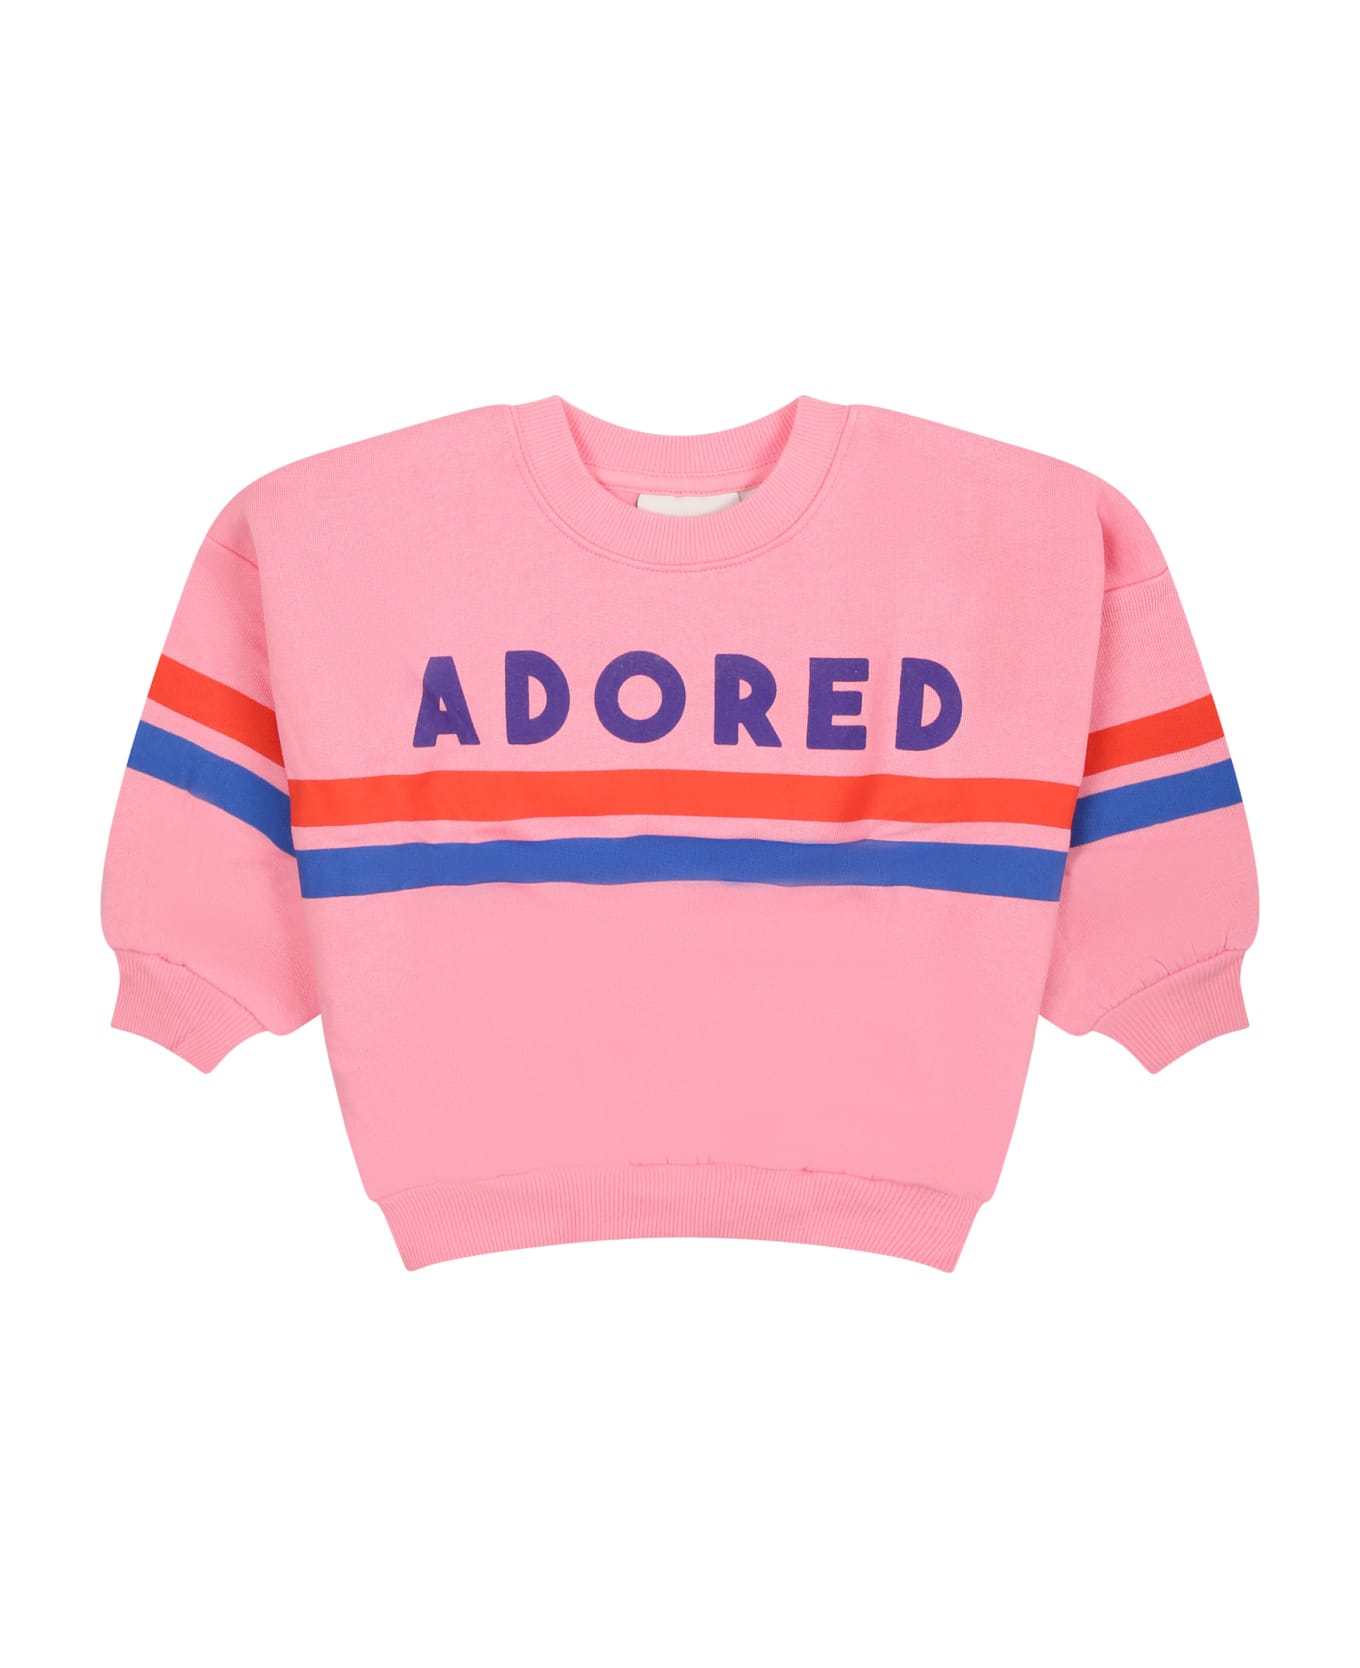 Mini Rodini Pink Sweatshirt For Baby Girl With Writing - Pink